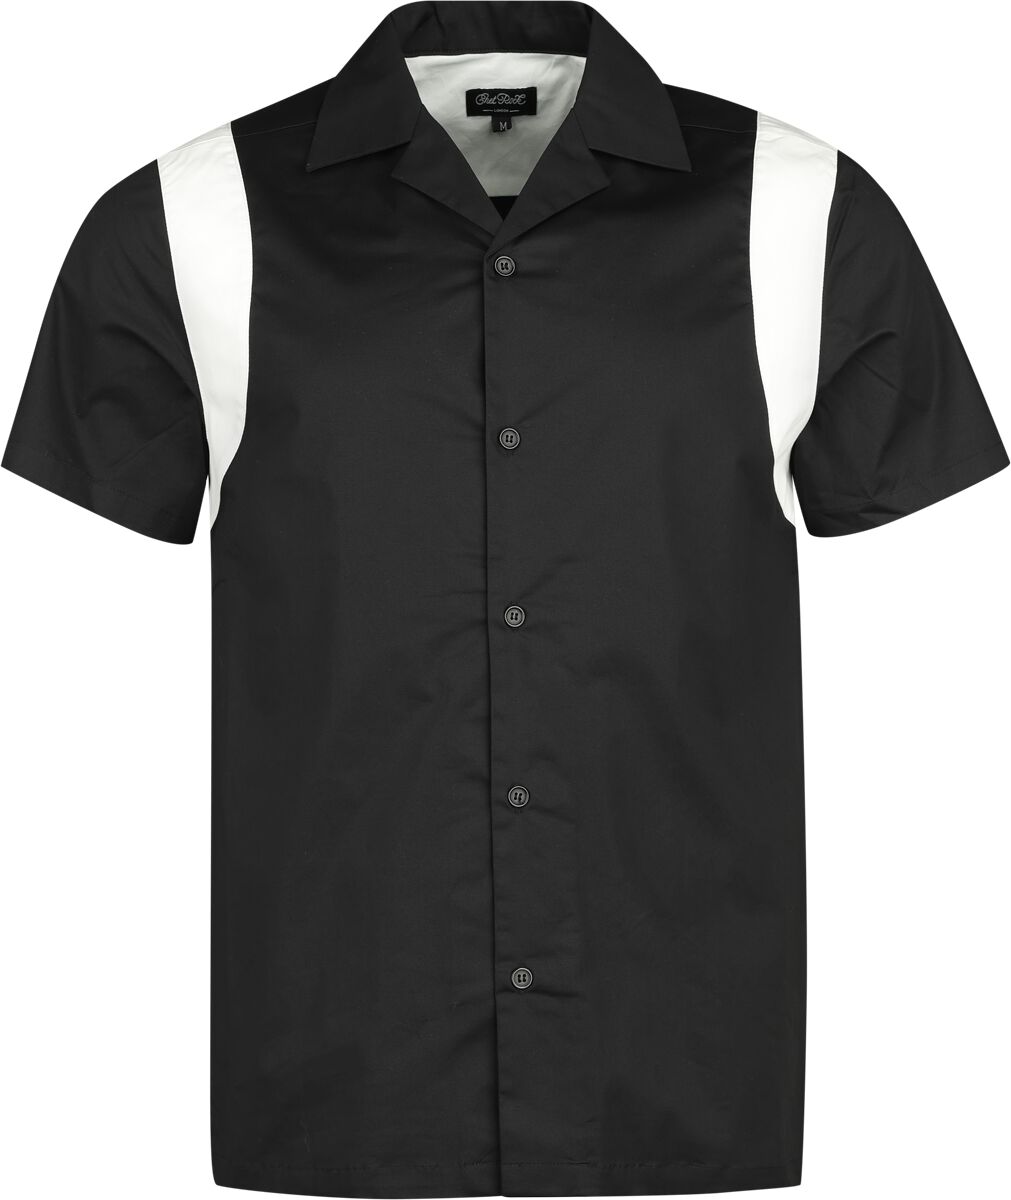 Chet Rock Marty Bowling Shirt Kurzarmhemd schwarz weiß in S